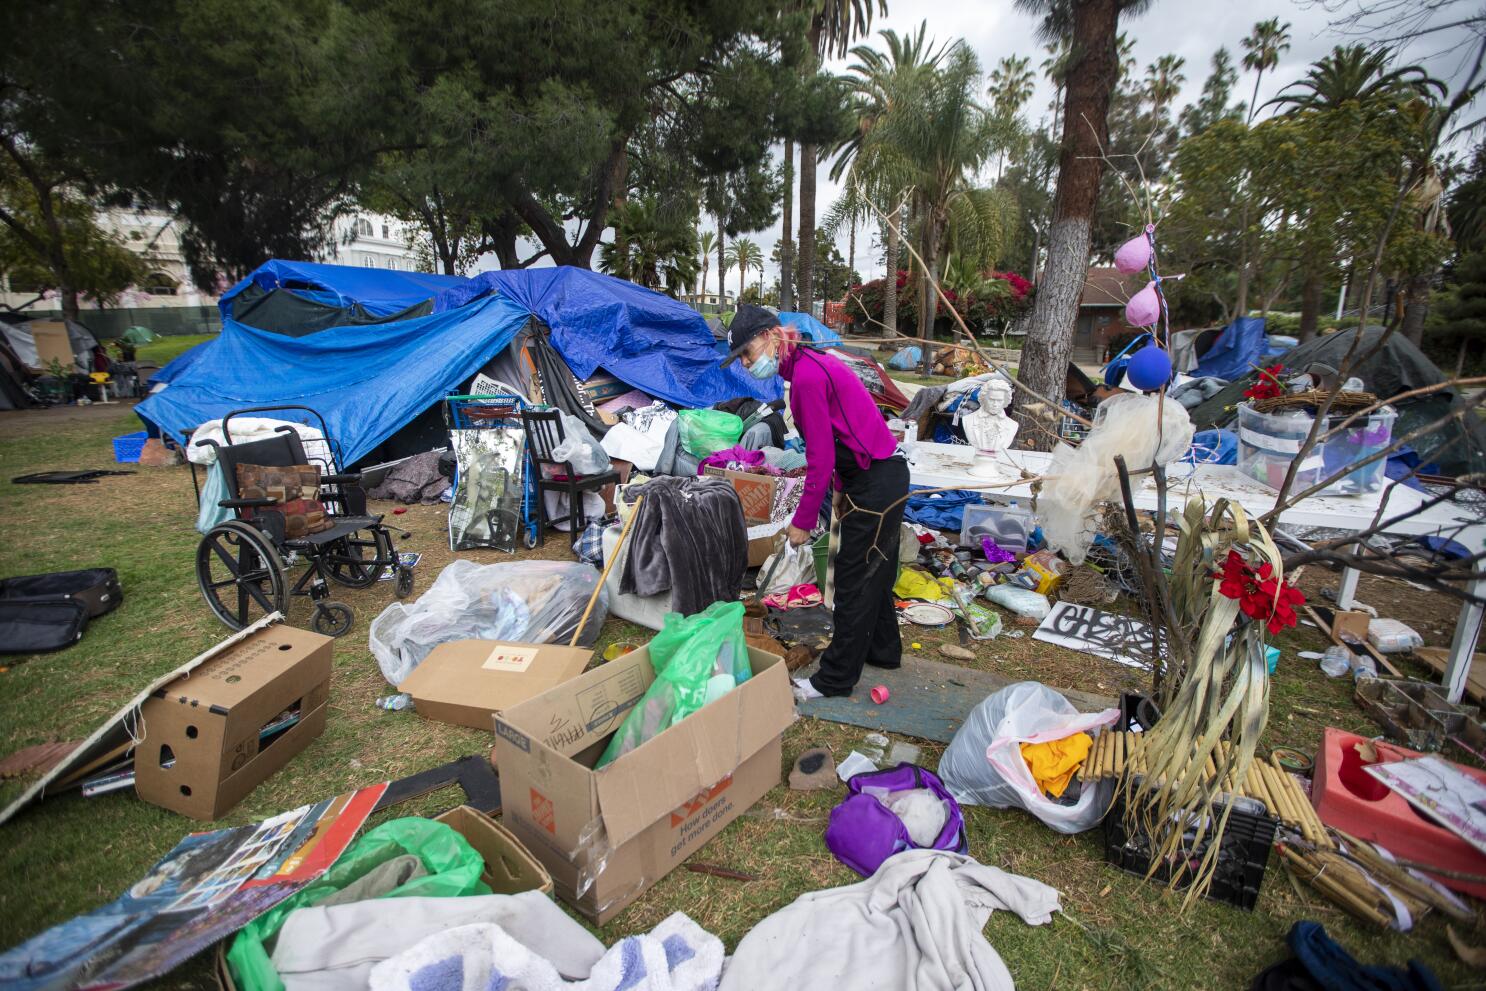 Echo Park encampment a battleground in L.A. homeless crisis - Los Angeles  Times